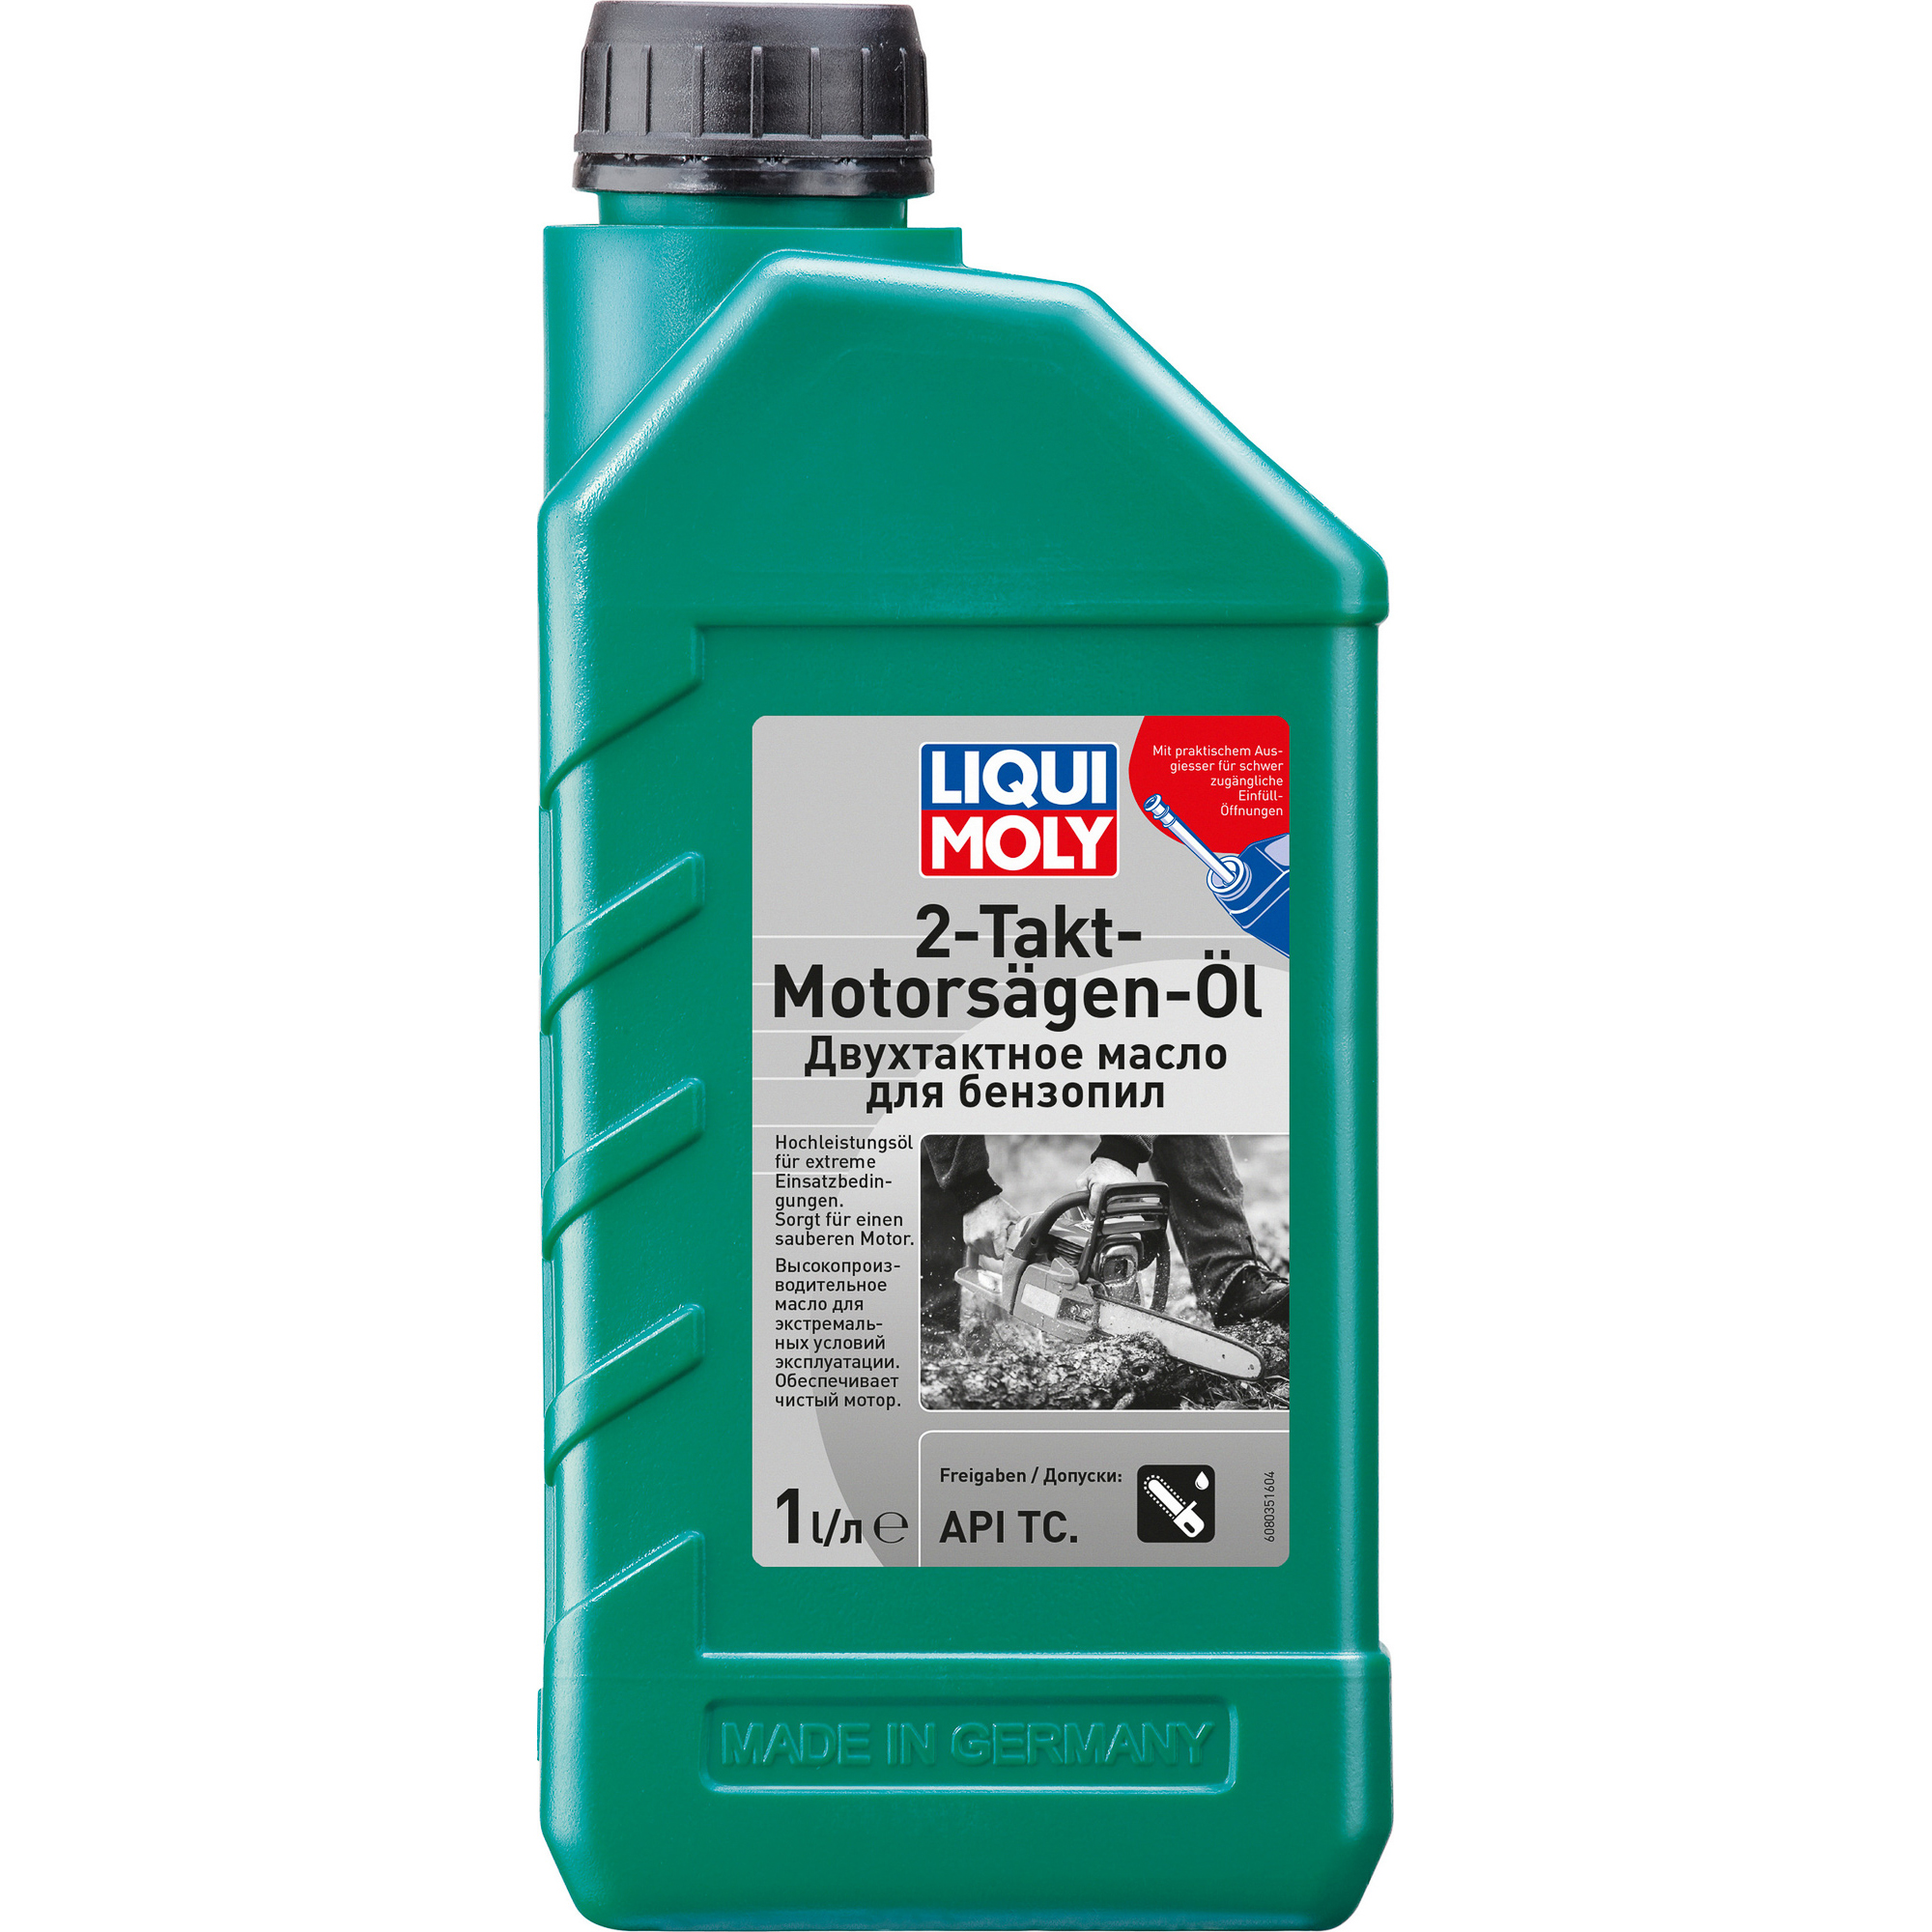 Масло Liqui Moly 2-Takt-Motorsagen-Oil 1 л